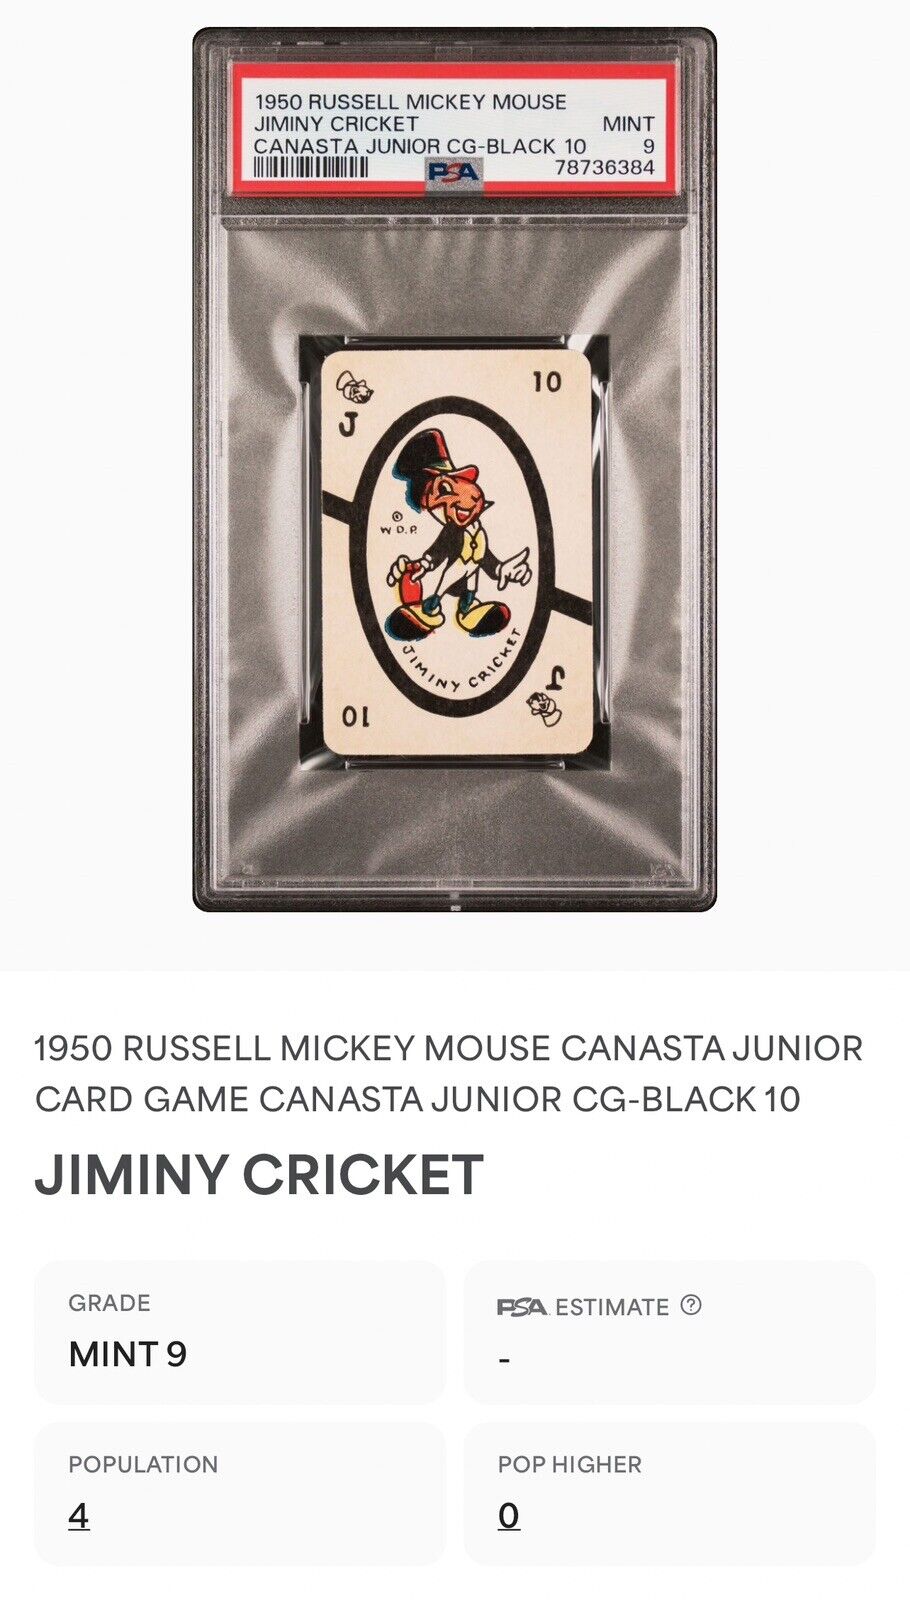 RARE VINTAGE 1950s RUSSELL MICKEY MOUSE JIMINY CRICKET CANASTA CARD PSA 9 MINT